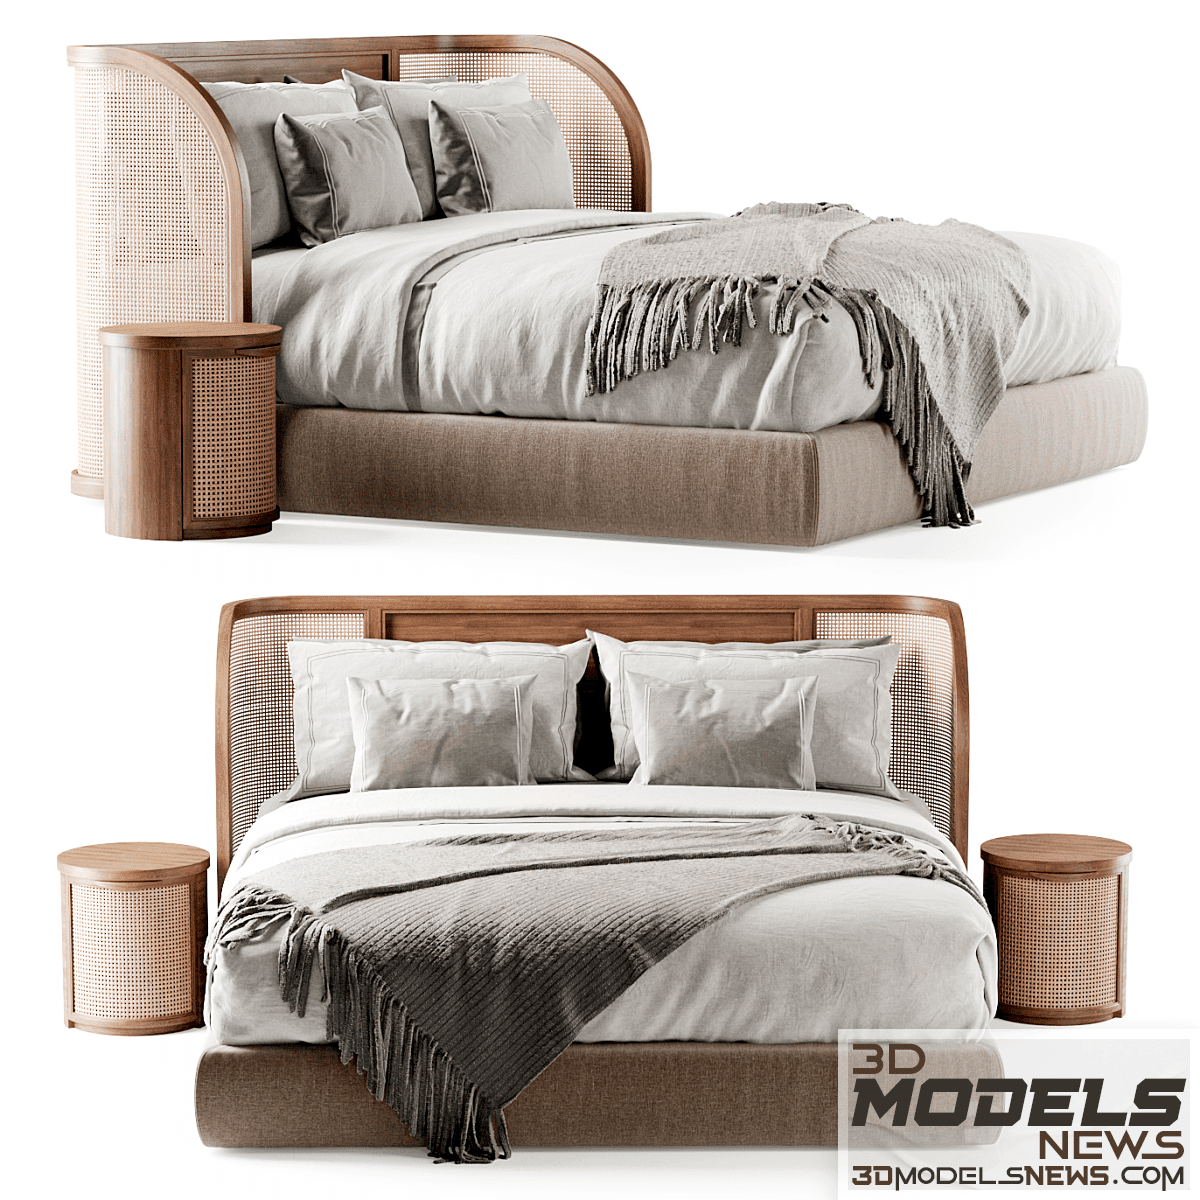 Wooden double bed rattan model